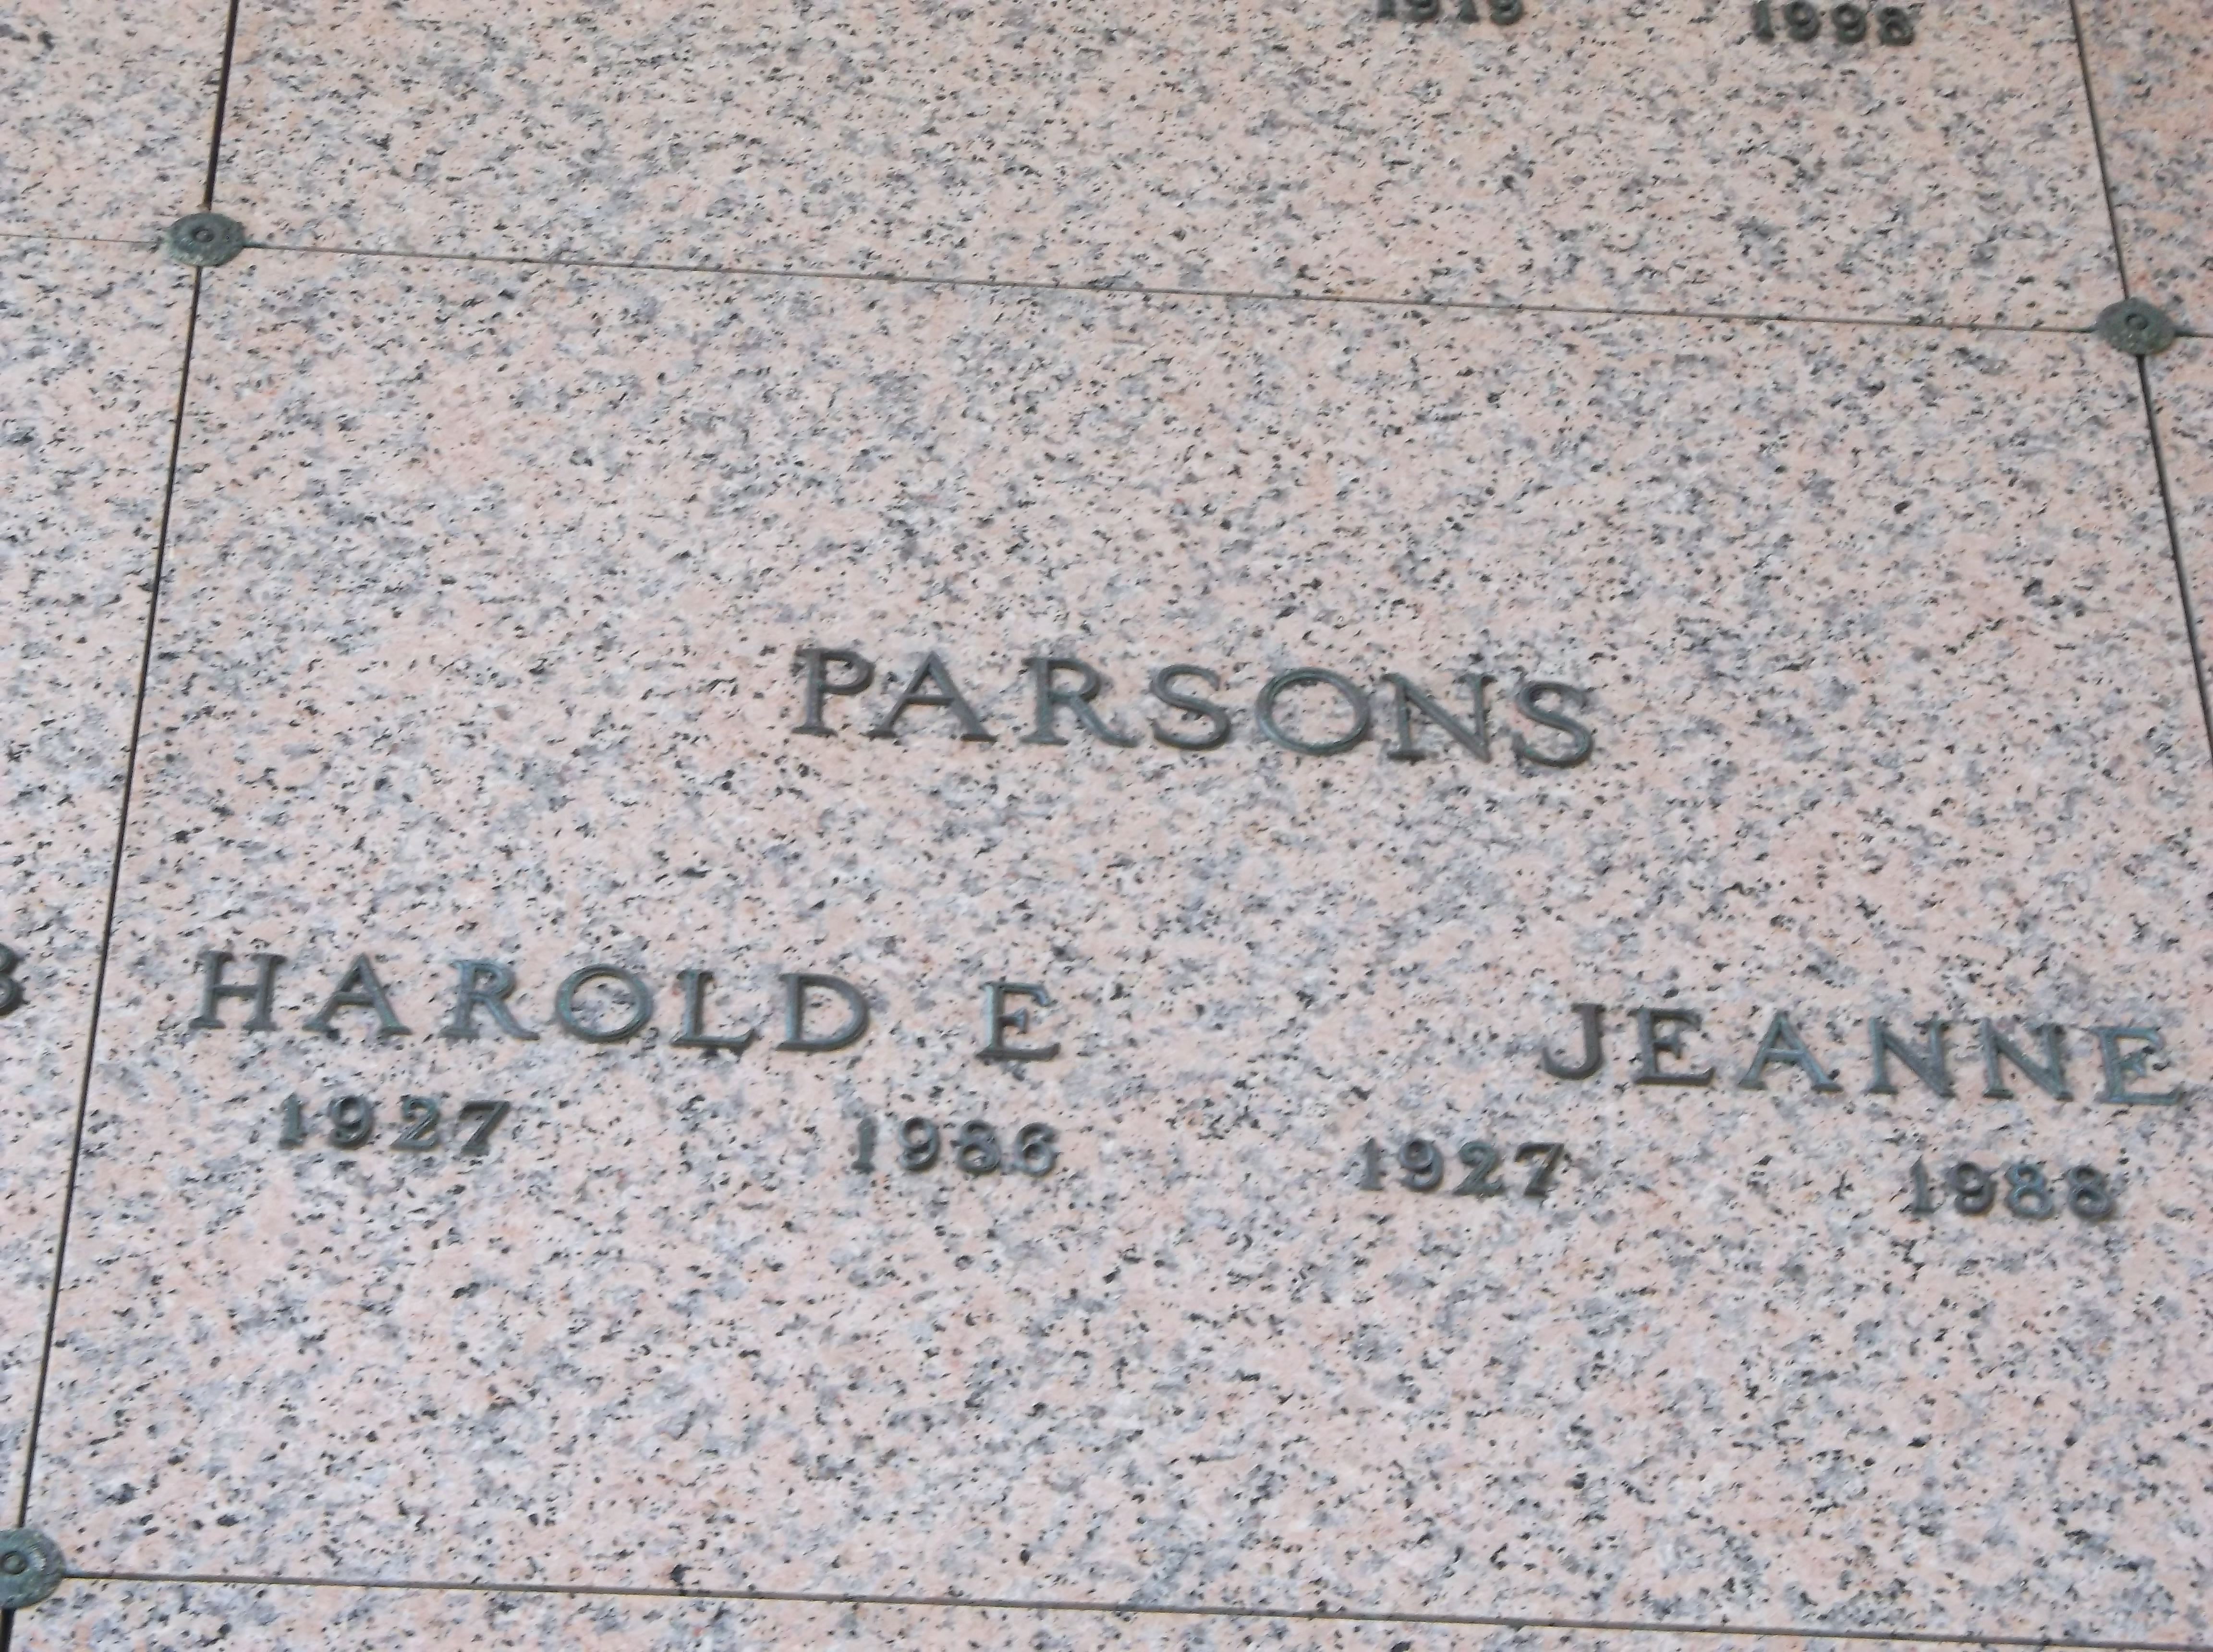 Harold E Parsons